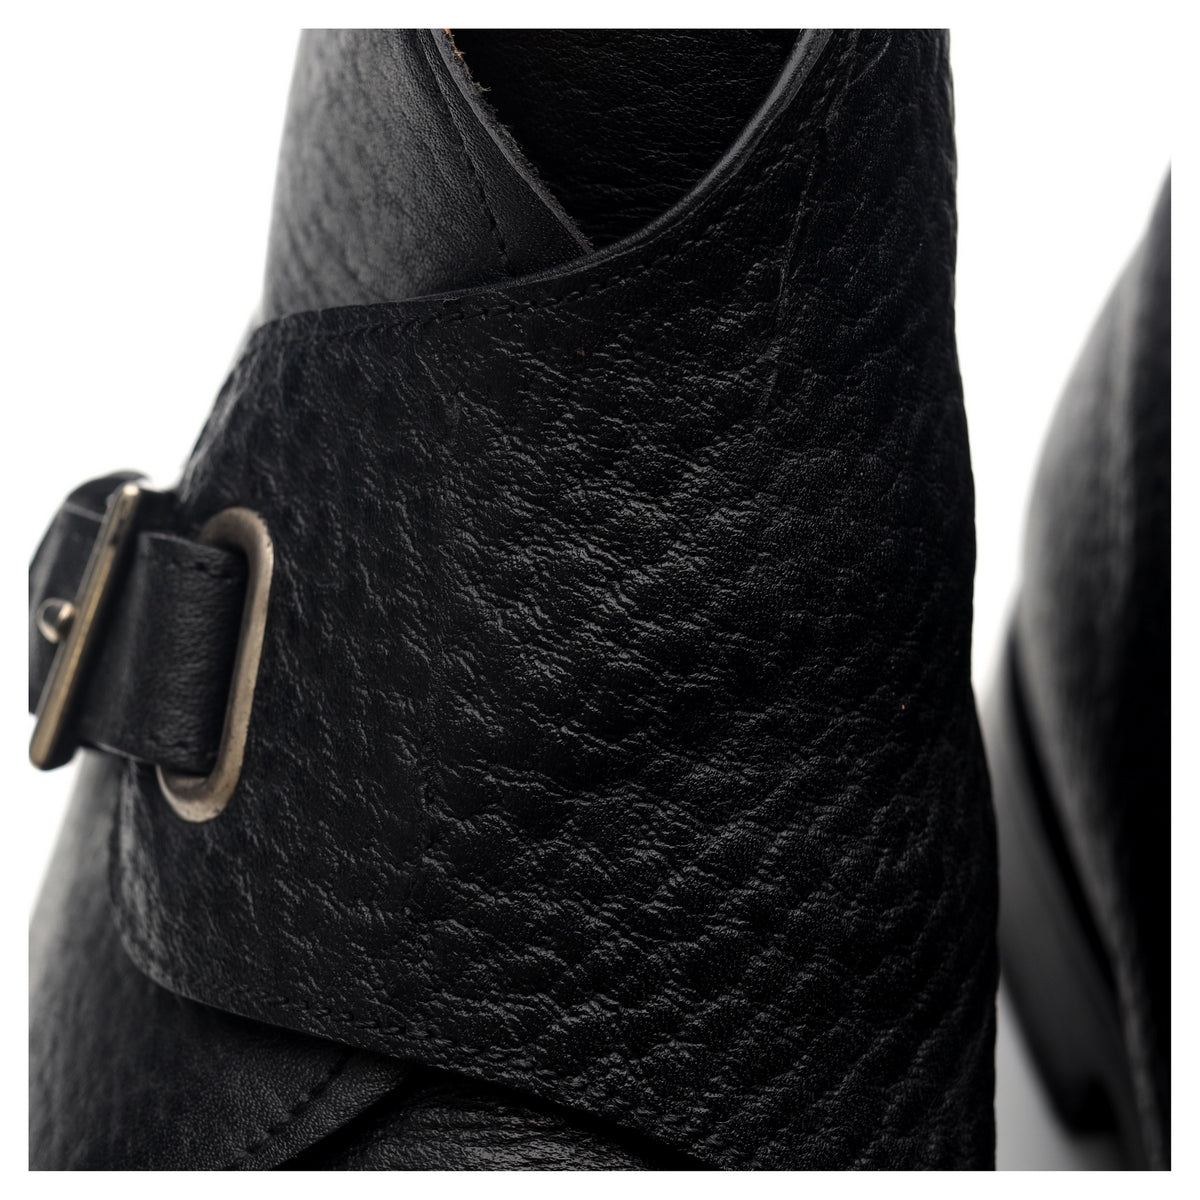 &#39;Davos&#39; Black Leather Apron Strap Boots UK 10.5 E